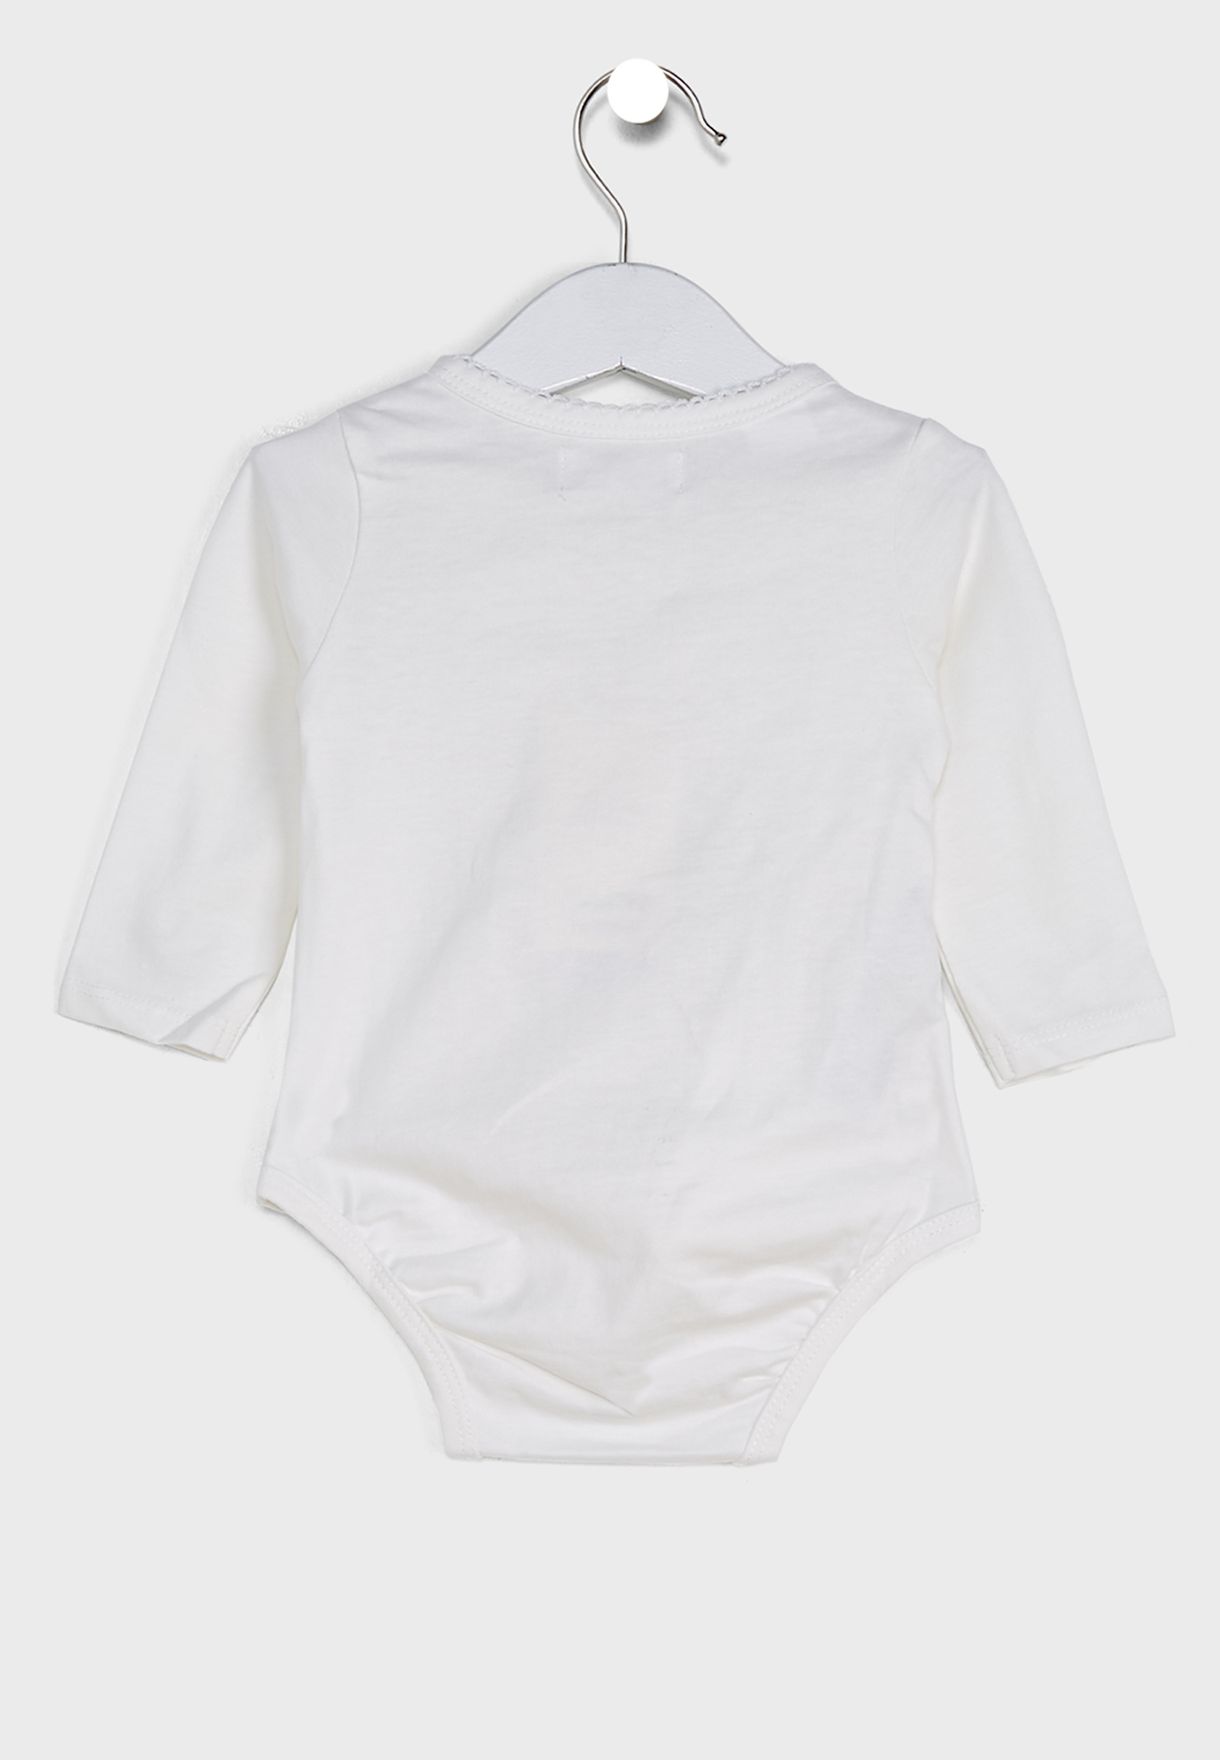 Infant Side Stud Closure Bodysuit